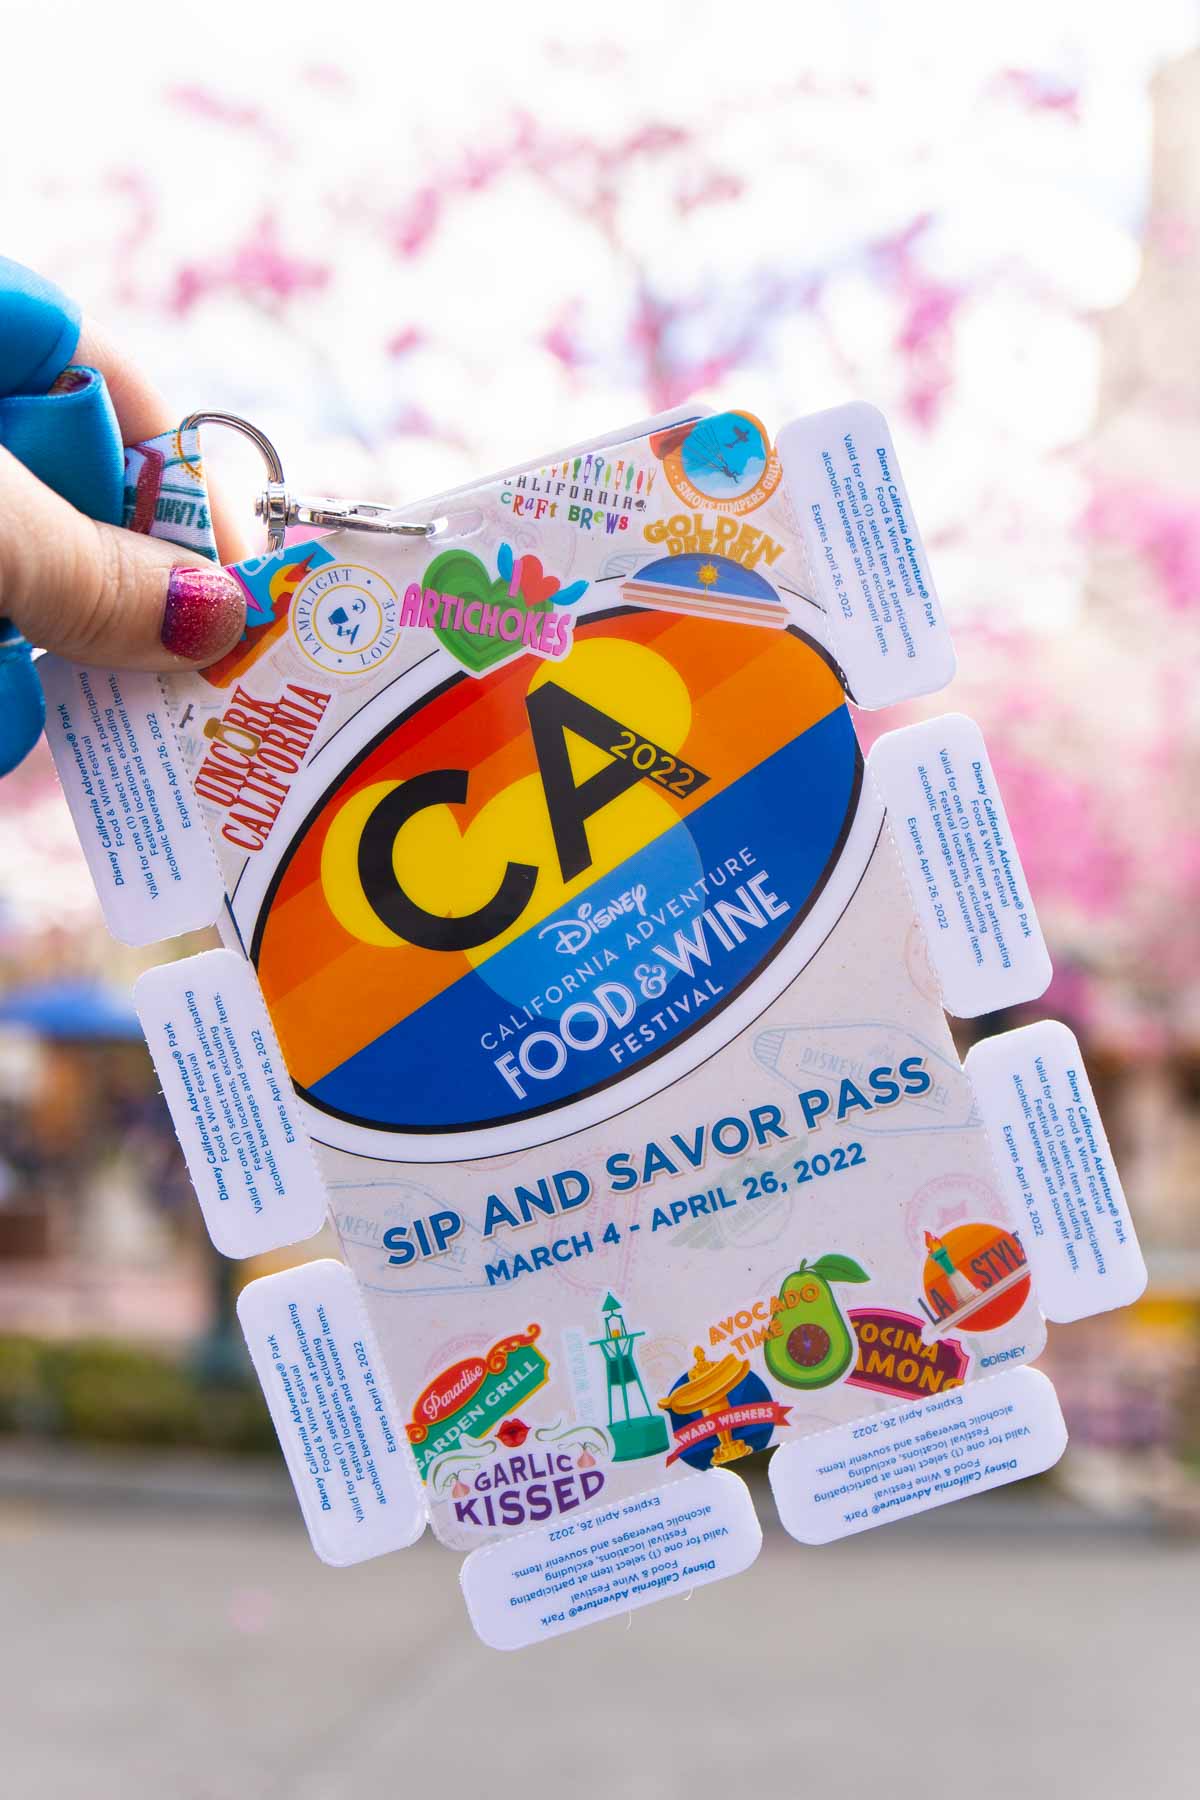 Disneyland Food and Wine Festival 2022 Sip & Savor Pass